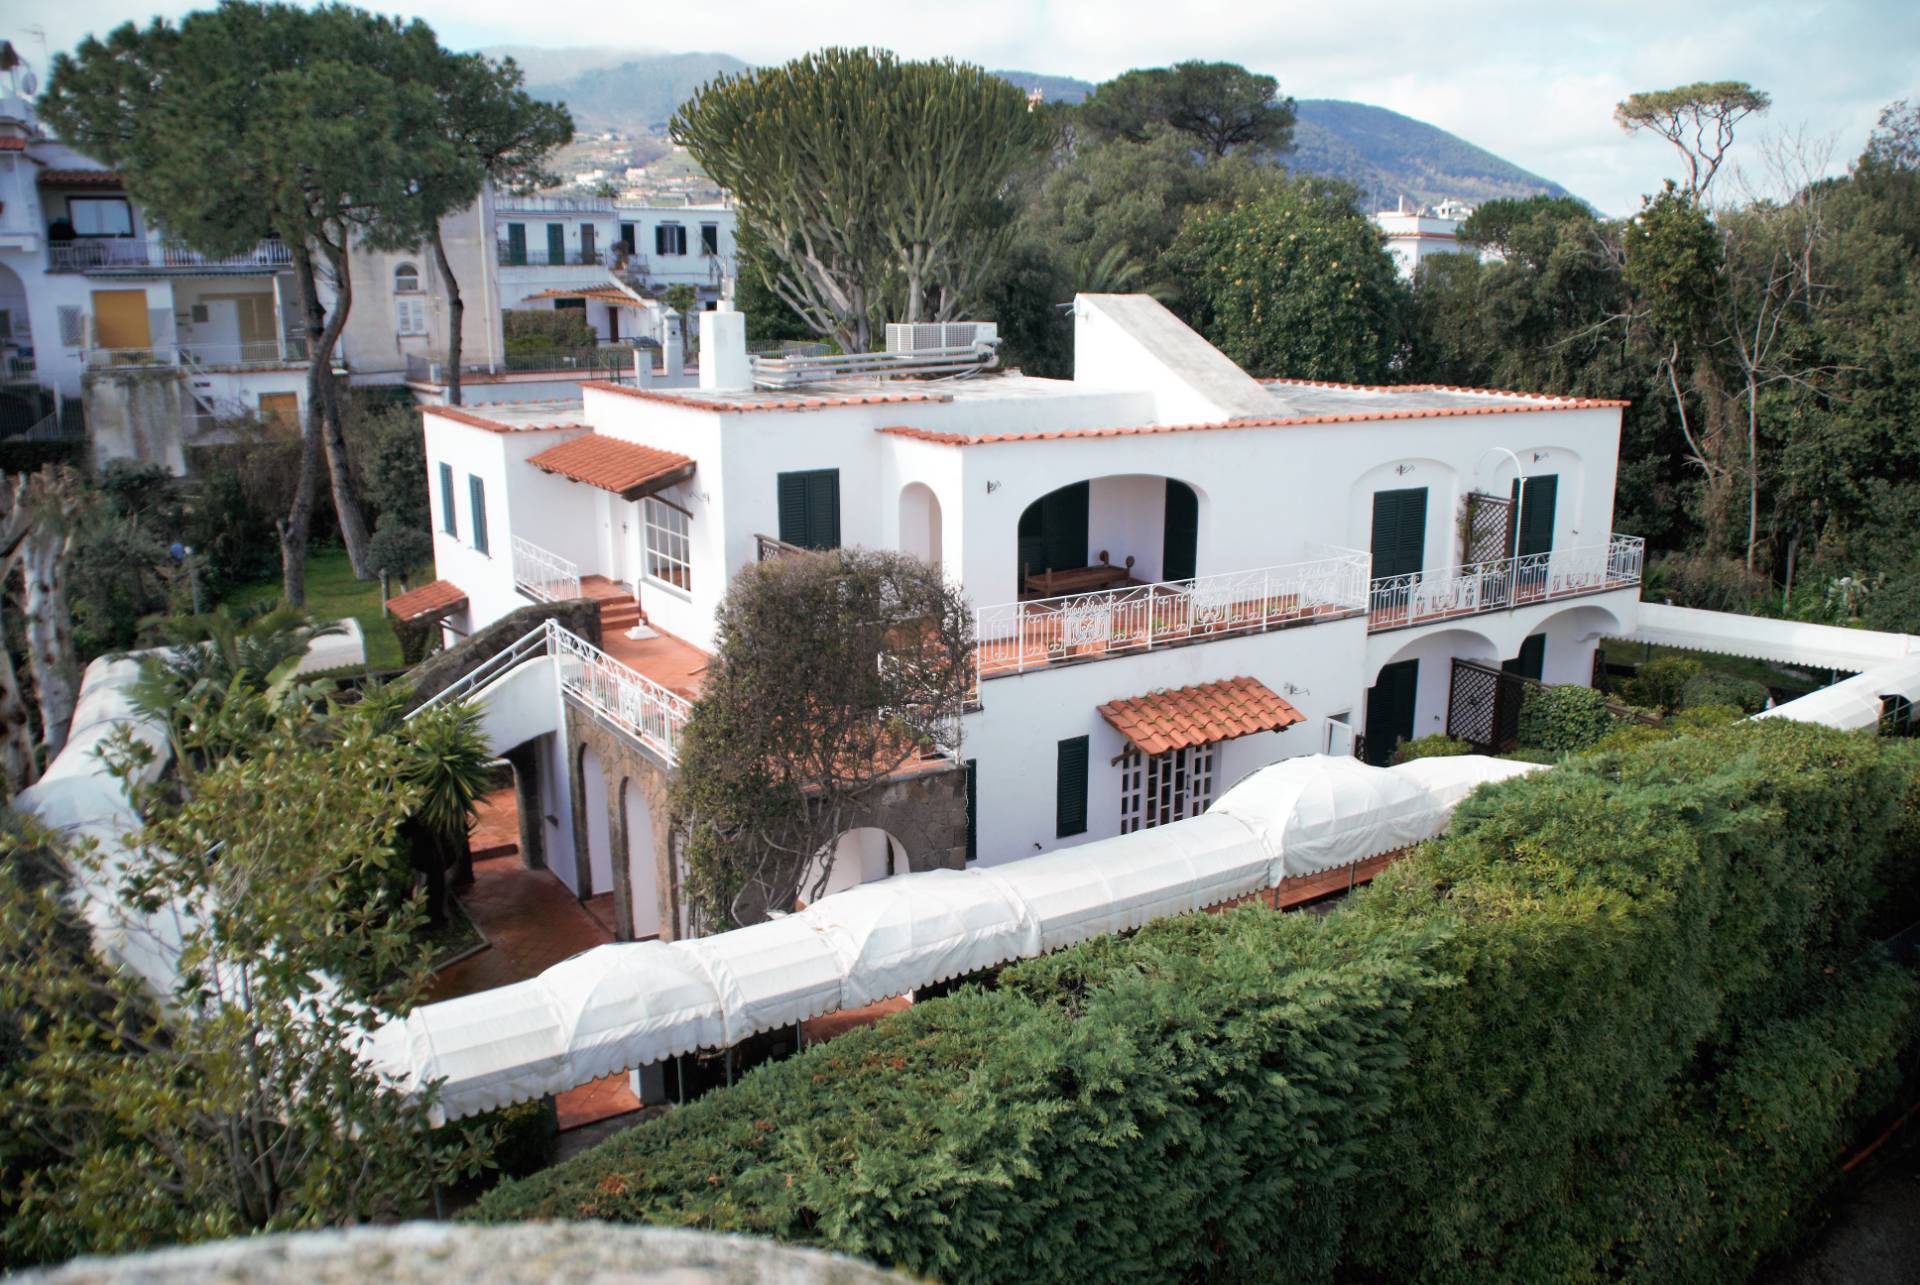 Villa in Vendita a Ischia: 5 locali, 420 mq - Foto 1